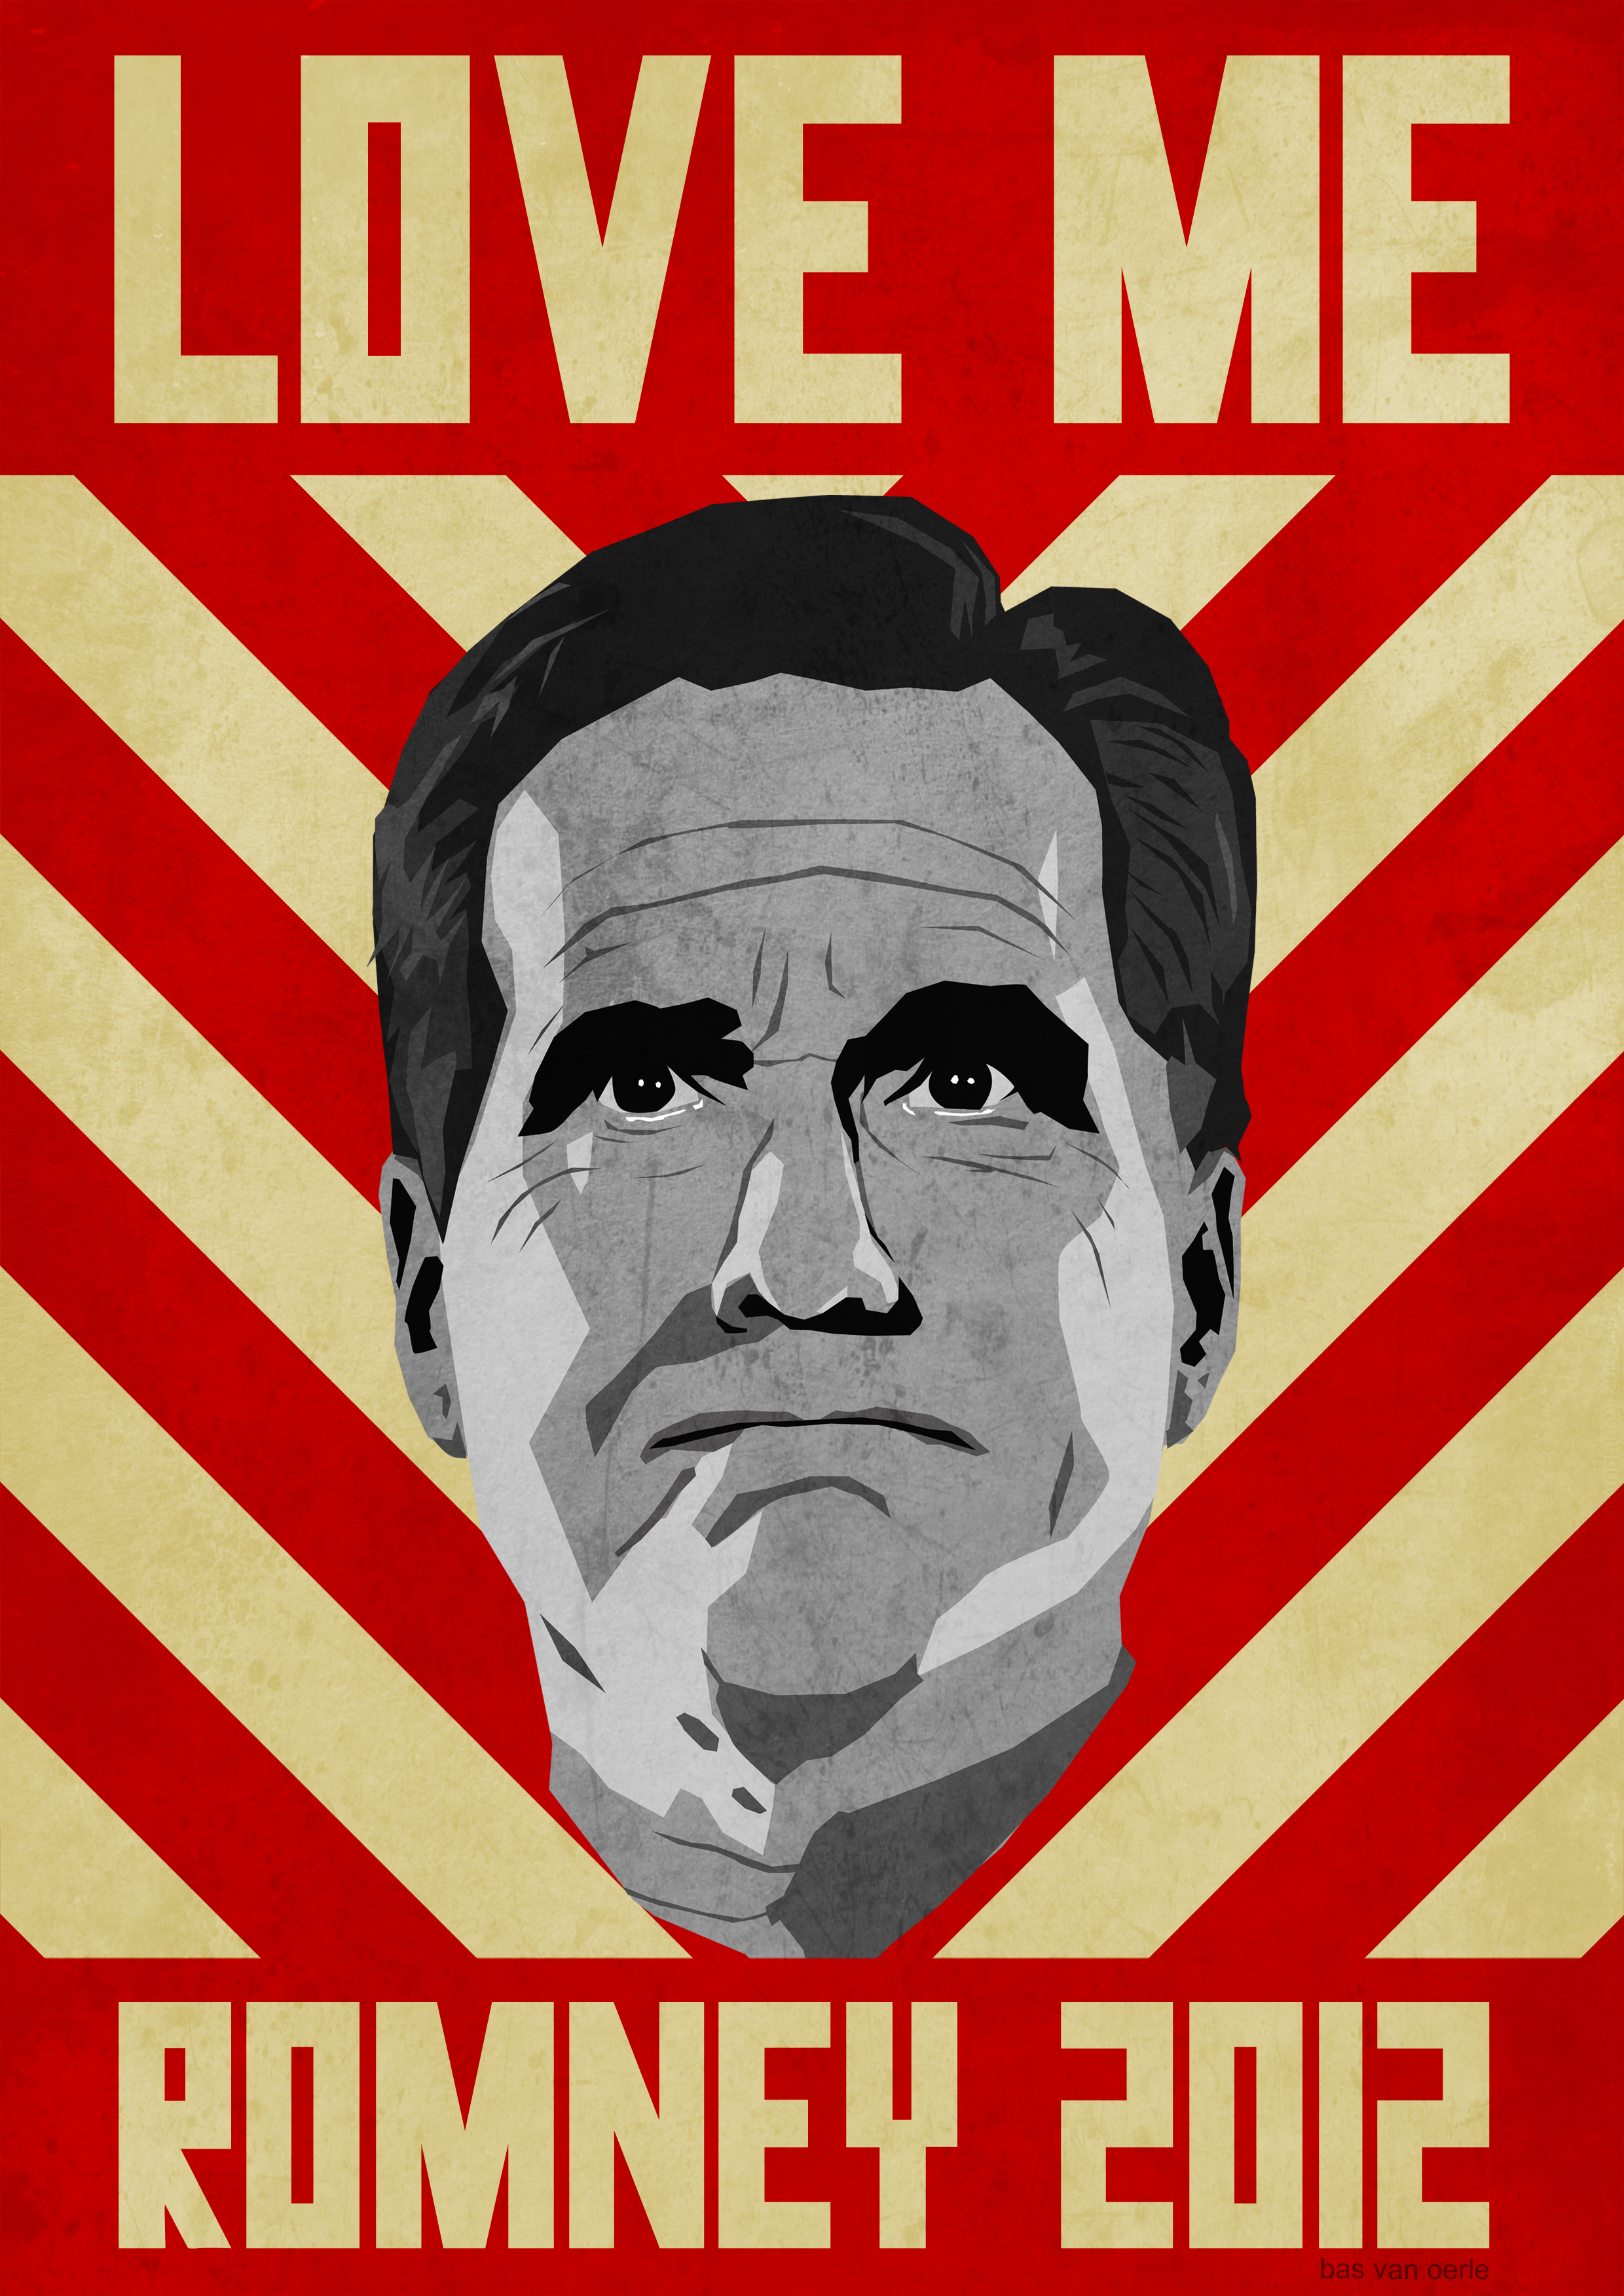 Romney2012a4.jpg